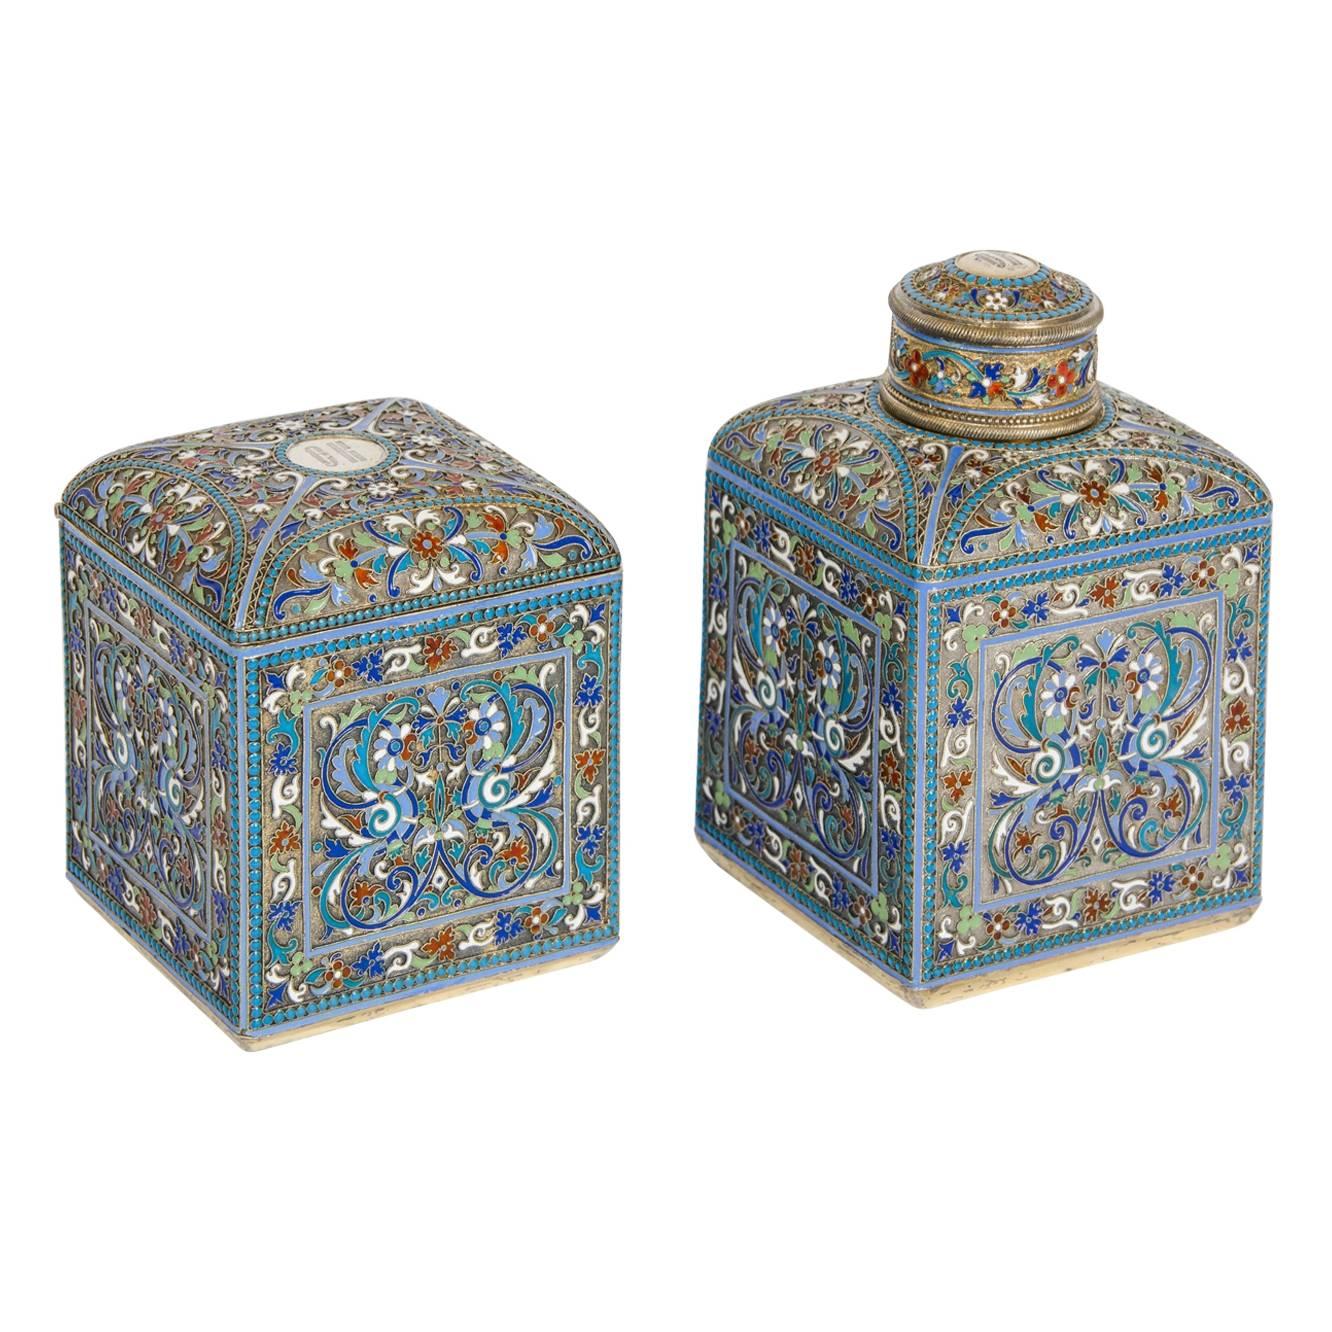 Late 19th Century Pair of Russian Cloisonné Enamel Boxes